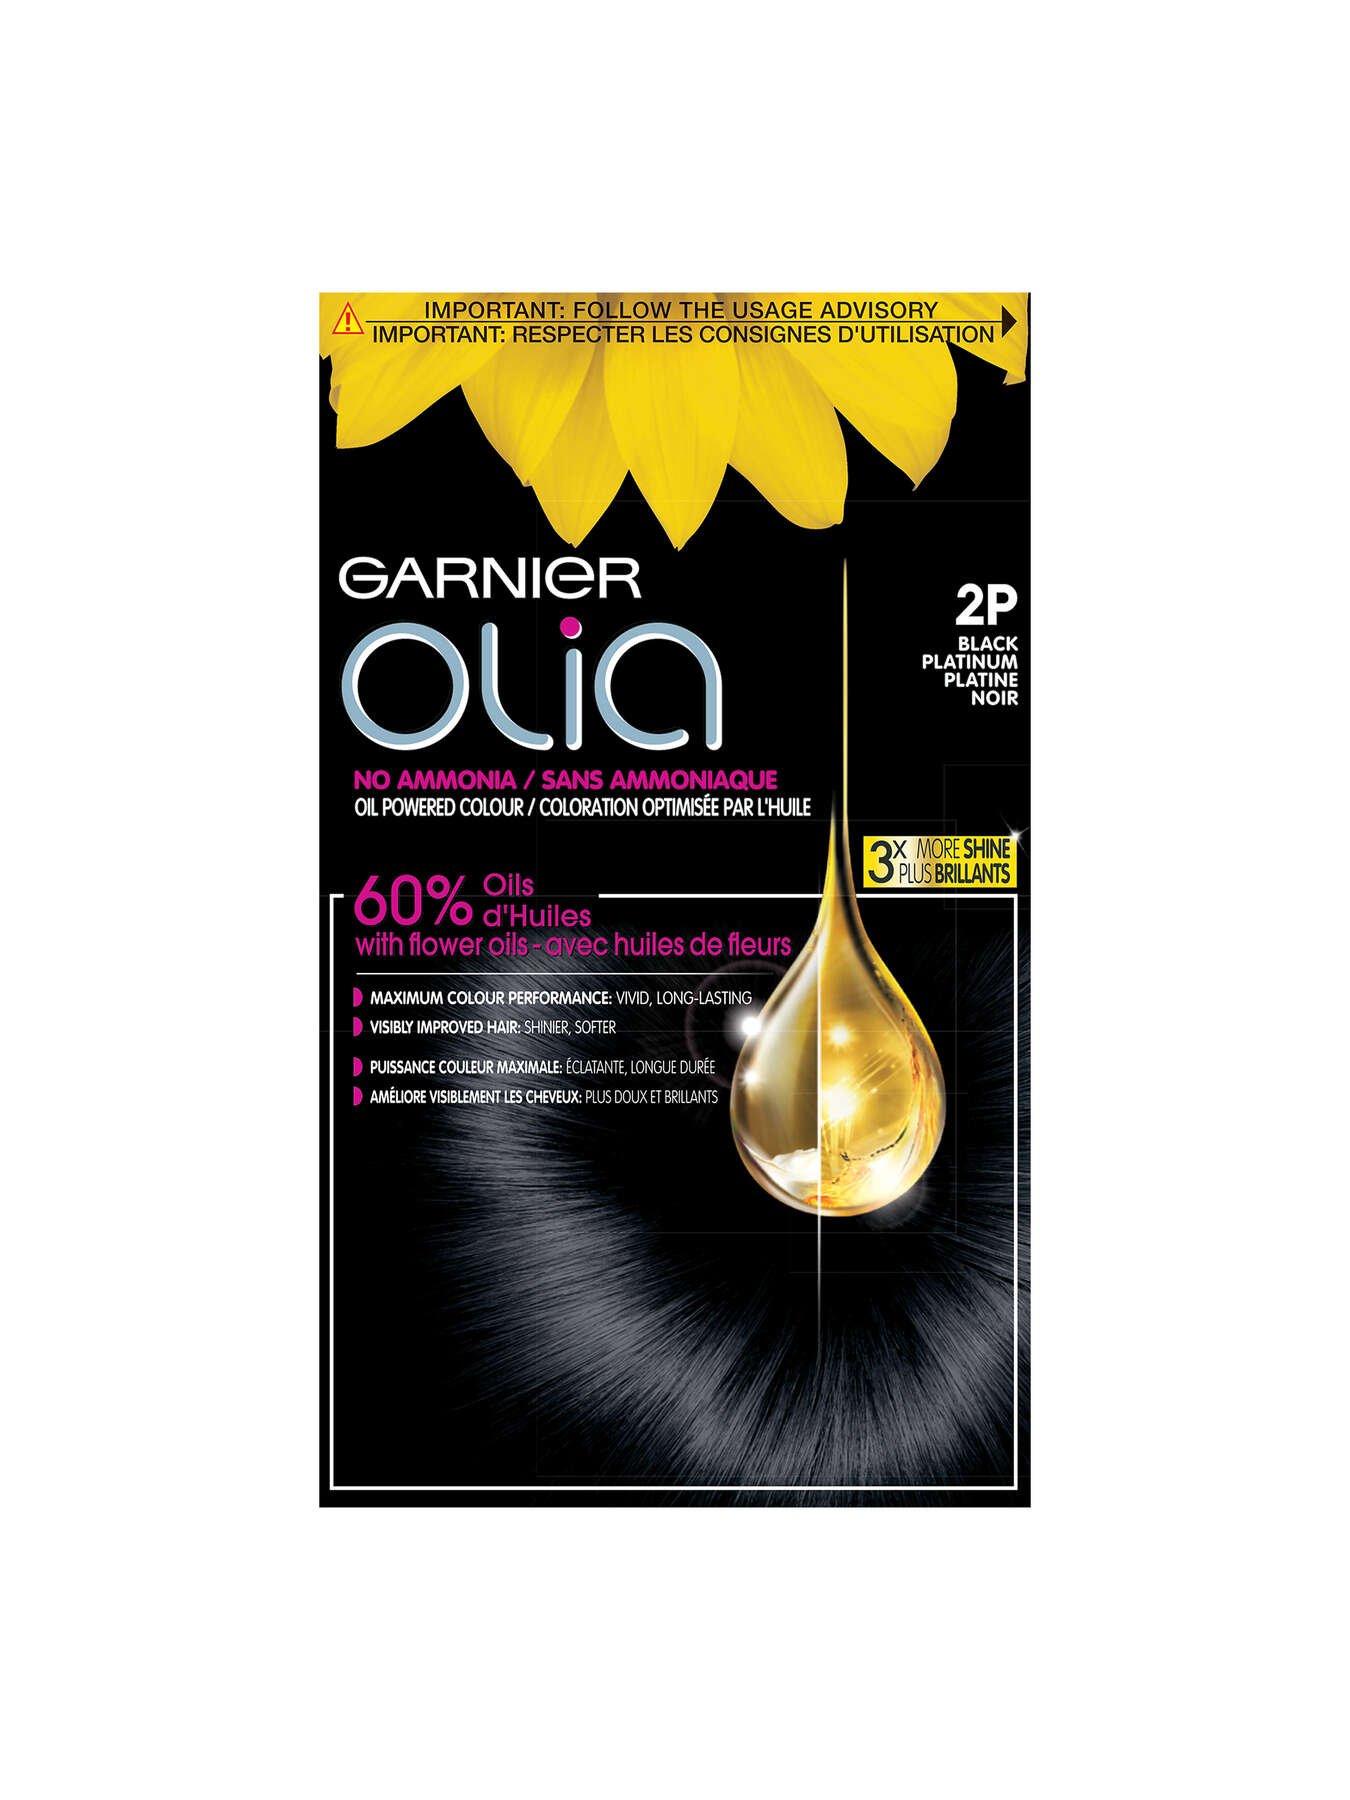 garnier hair dye olia 2p blackplatinum 3600541953260 t1